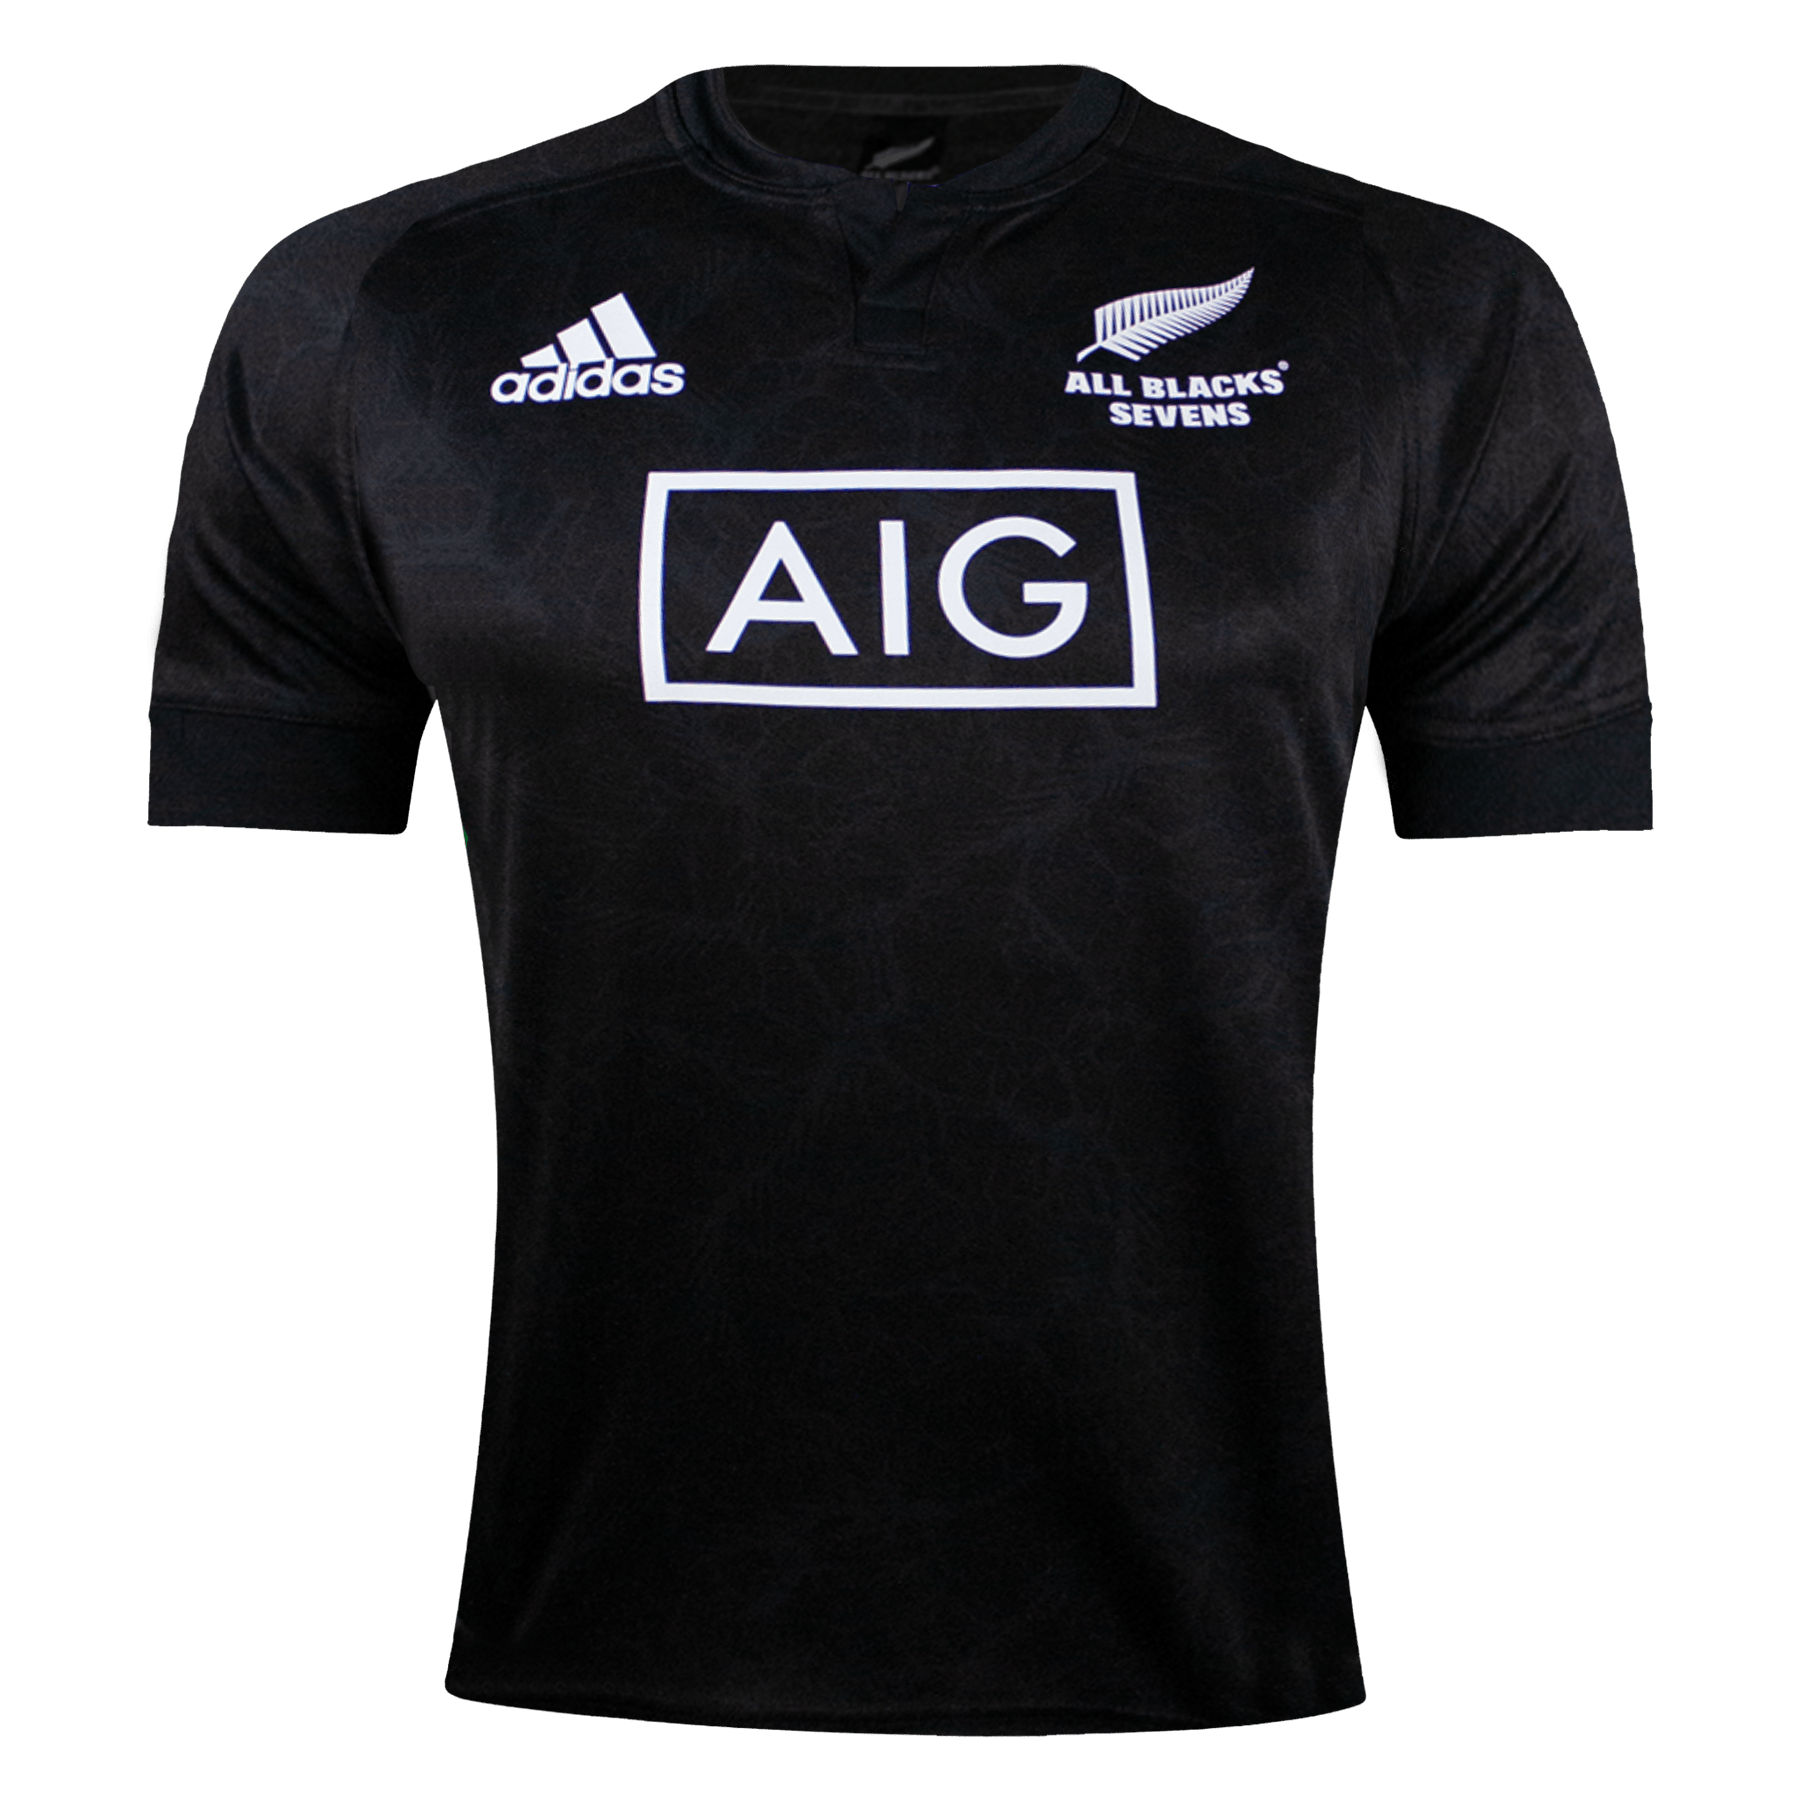 Adidas All Blacks Rugby 2021 Sevens Home Jersey - ALL BLACKS